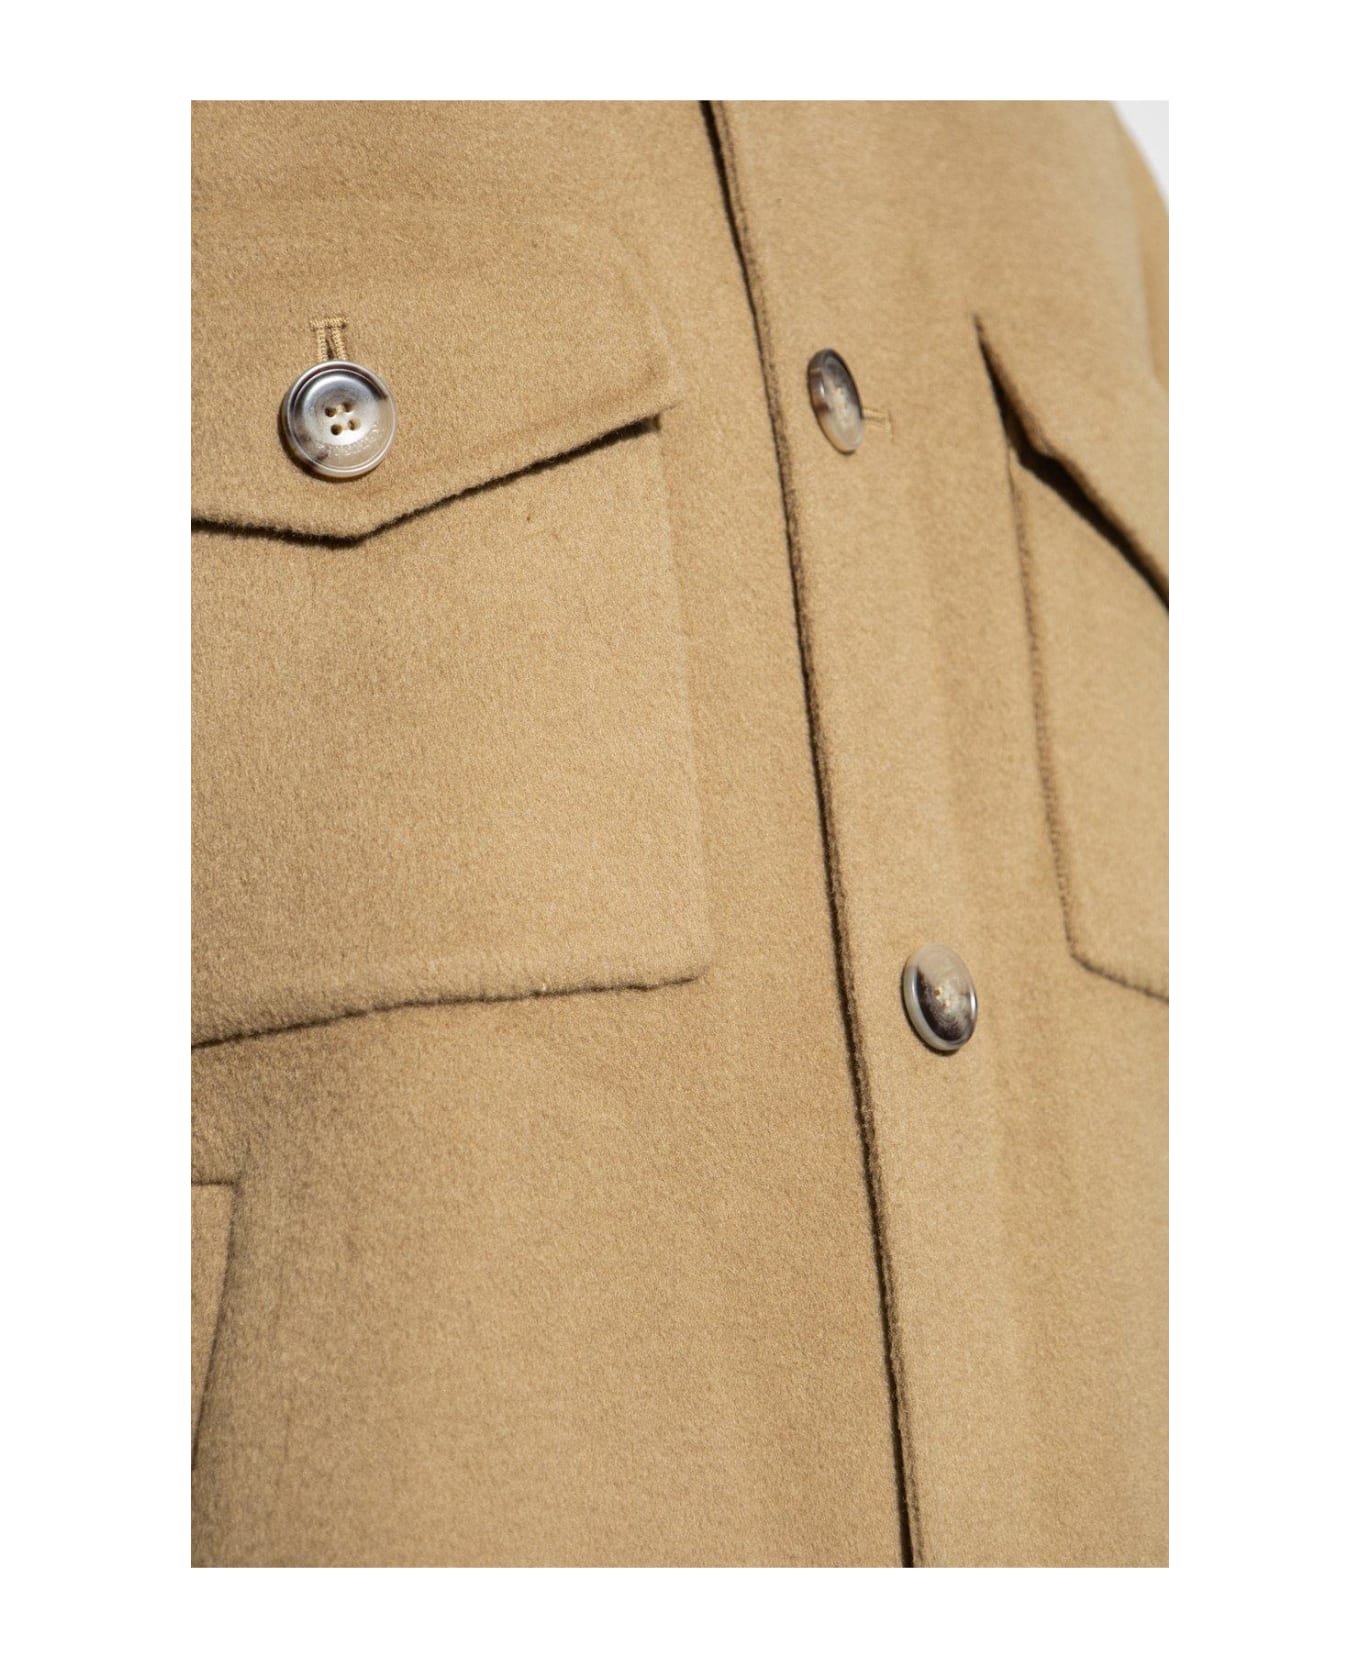 Nanushka Rhys Button-up Shirt Jacket - Kaki ジャケット